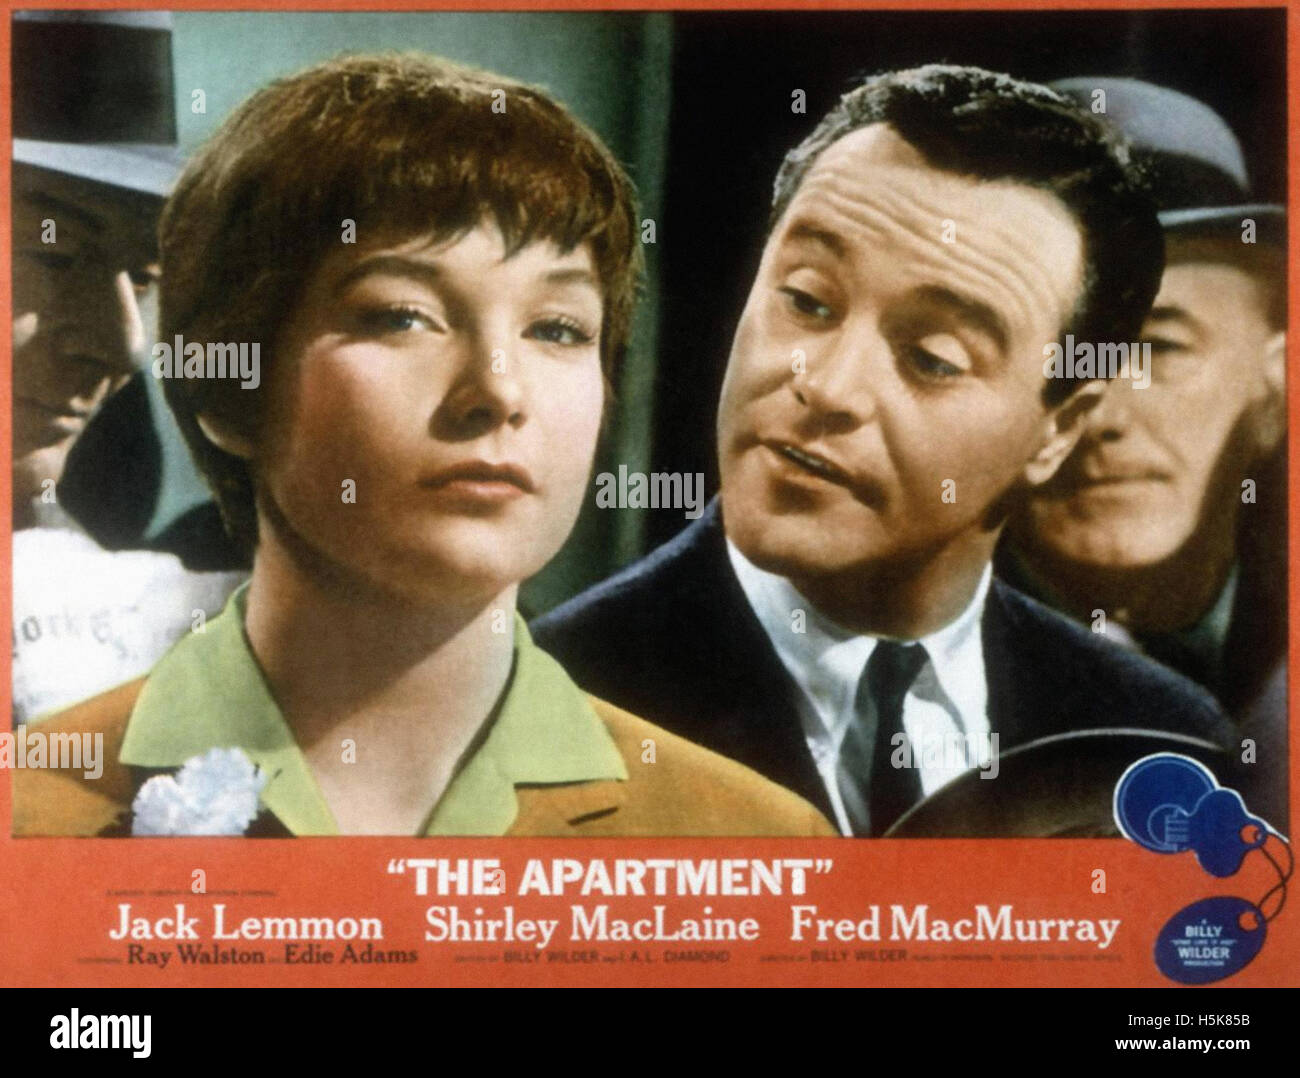 https://c8.alamy.com/comp/H5K85B/the-apartment-movie-poster-H5K85B.jpg